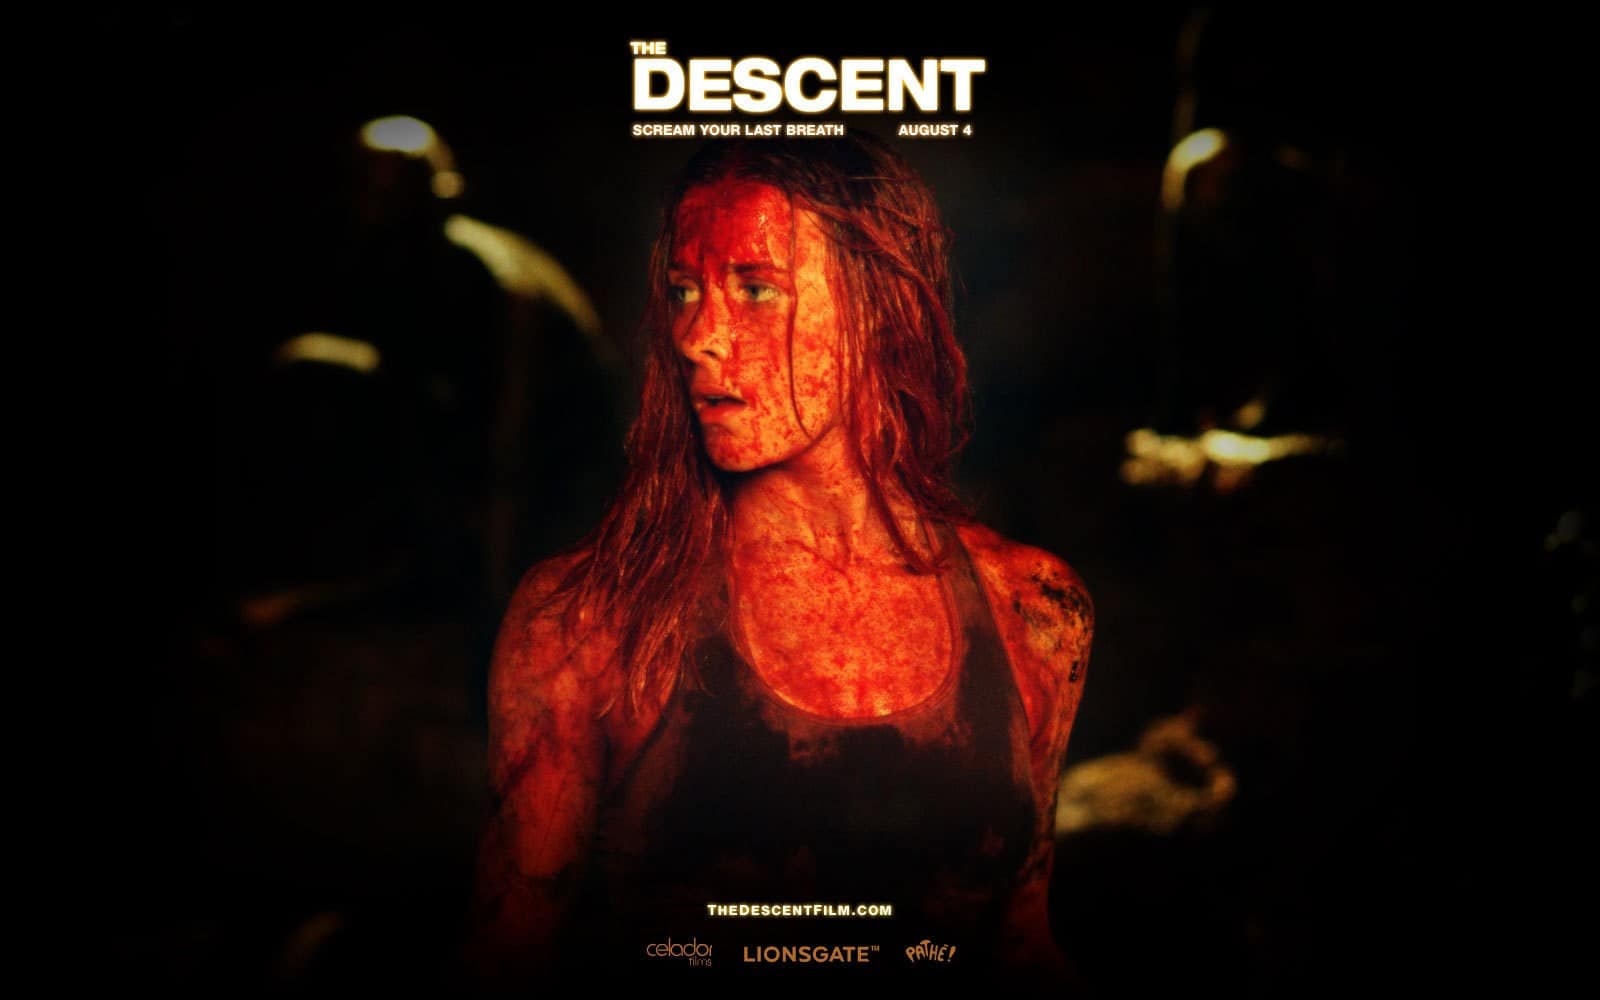 The Descent Movie Download 1080p Full HD Bluray